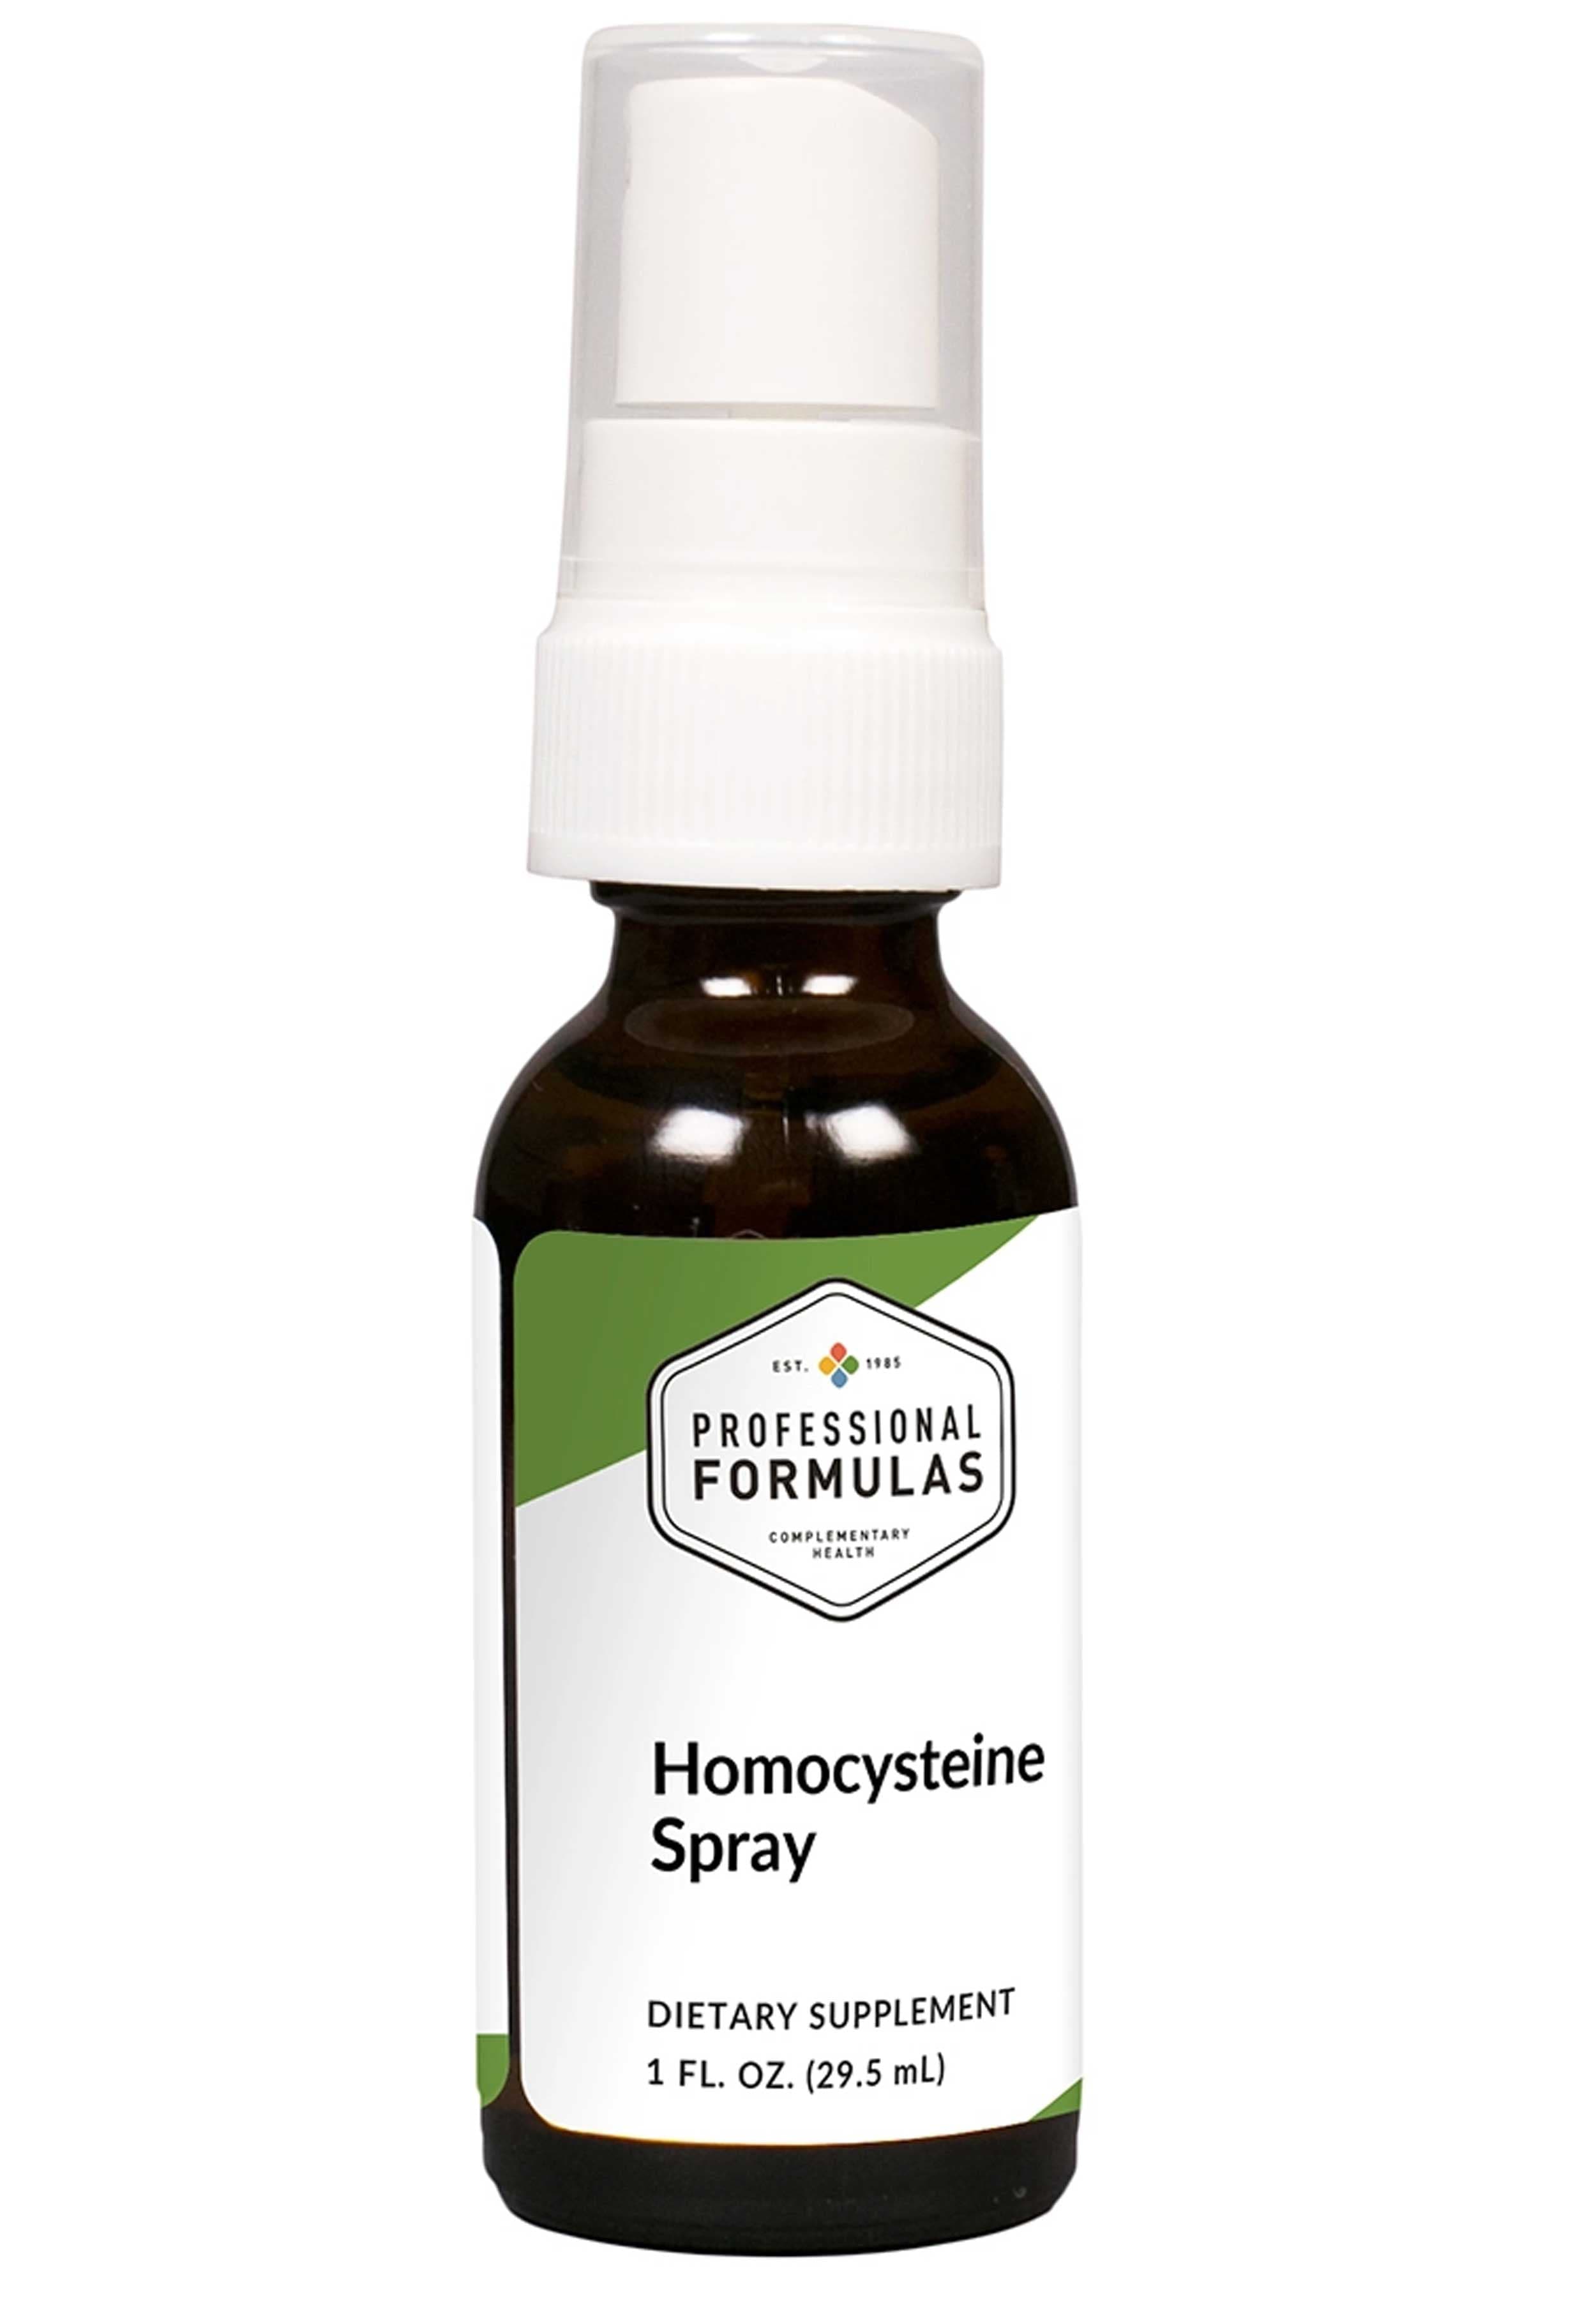 Professional Formulas Homocysteine Spray